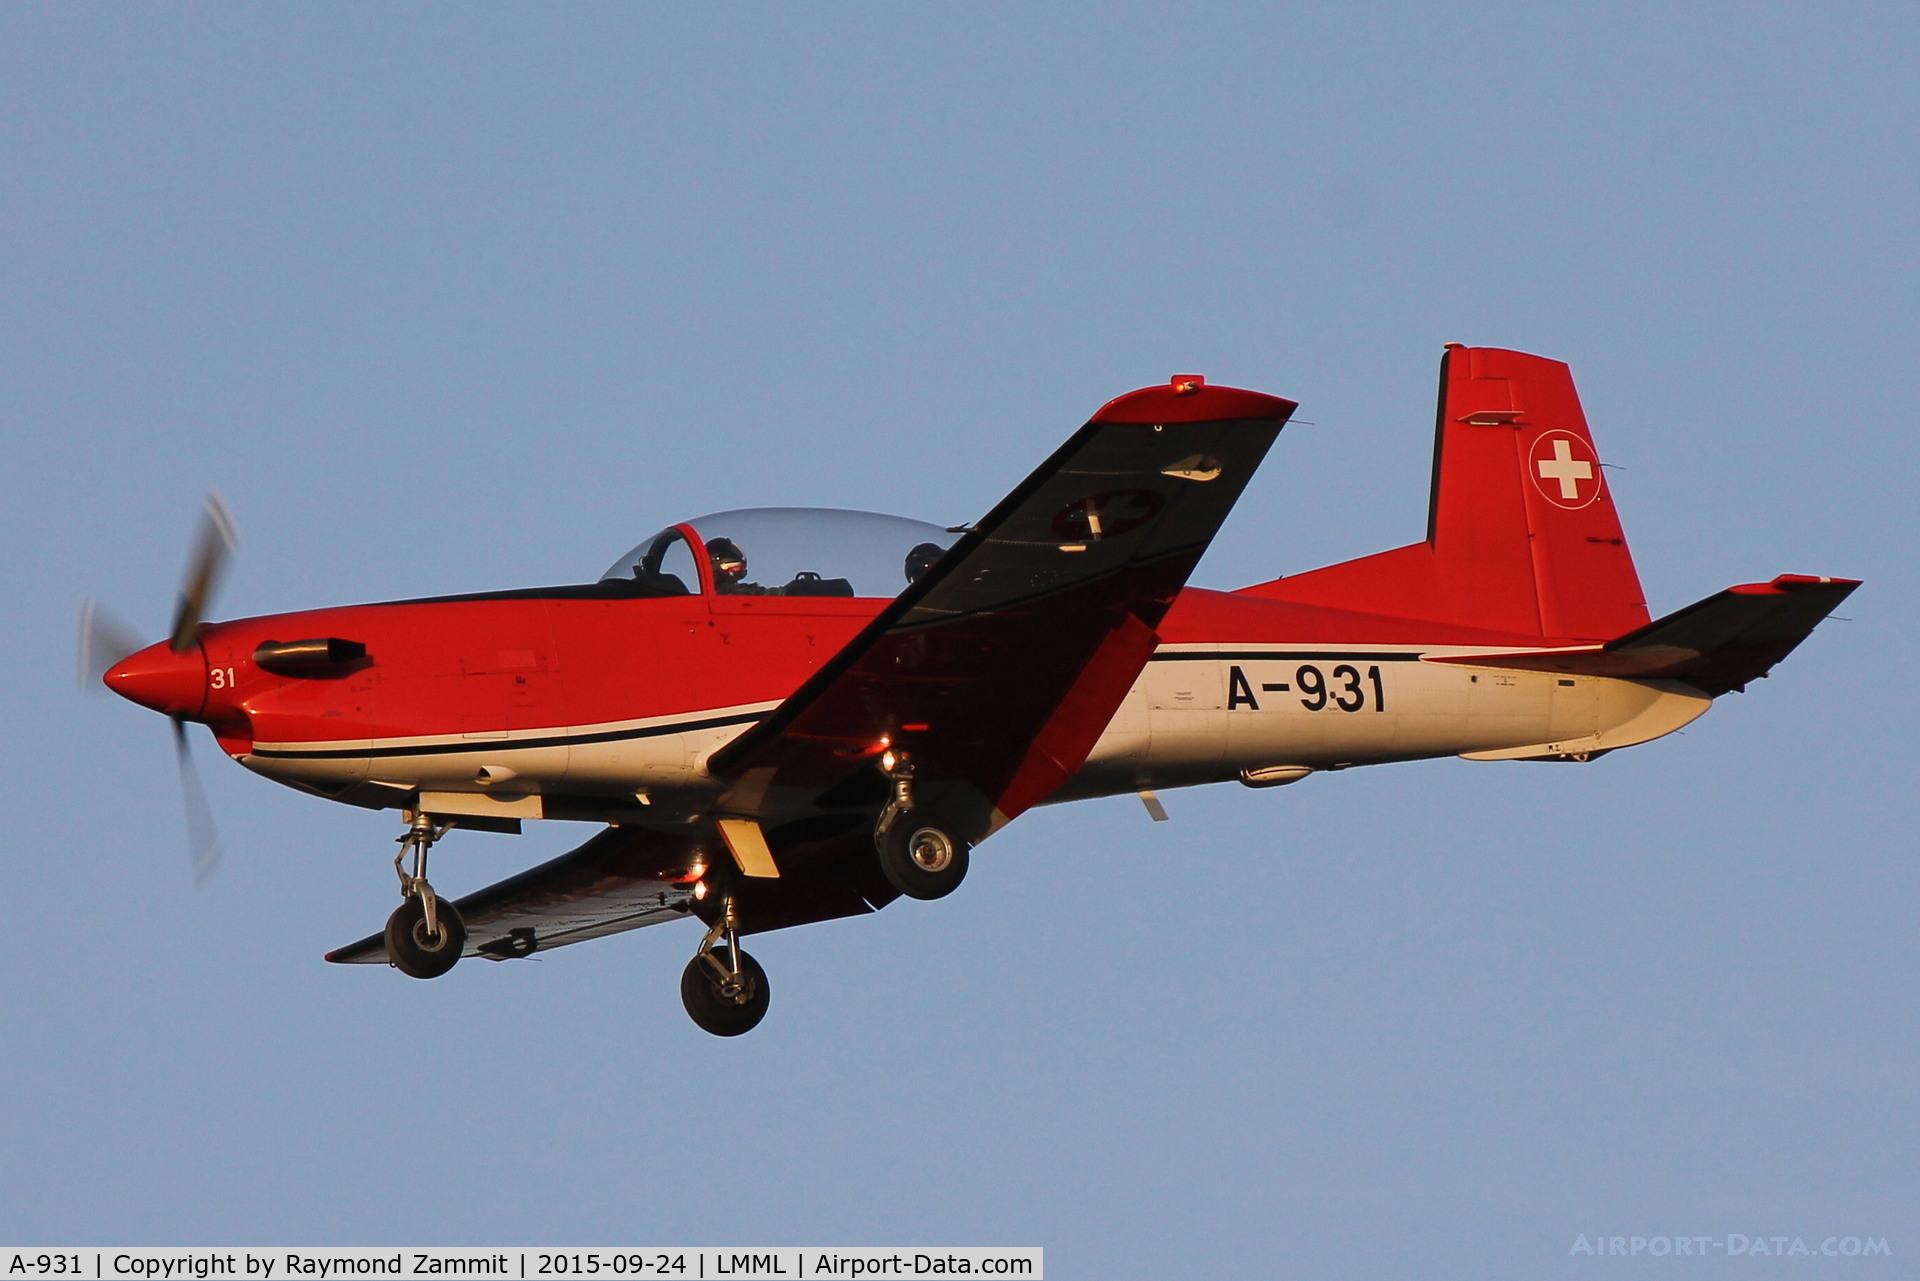 A-931, 1983 Pilatus PC-7 Turbo Trainer C/N 339, Pilatus PC-7 A-931 Swiss Air Force